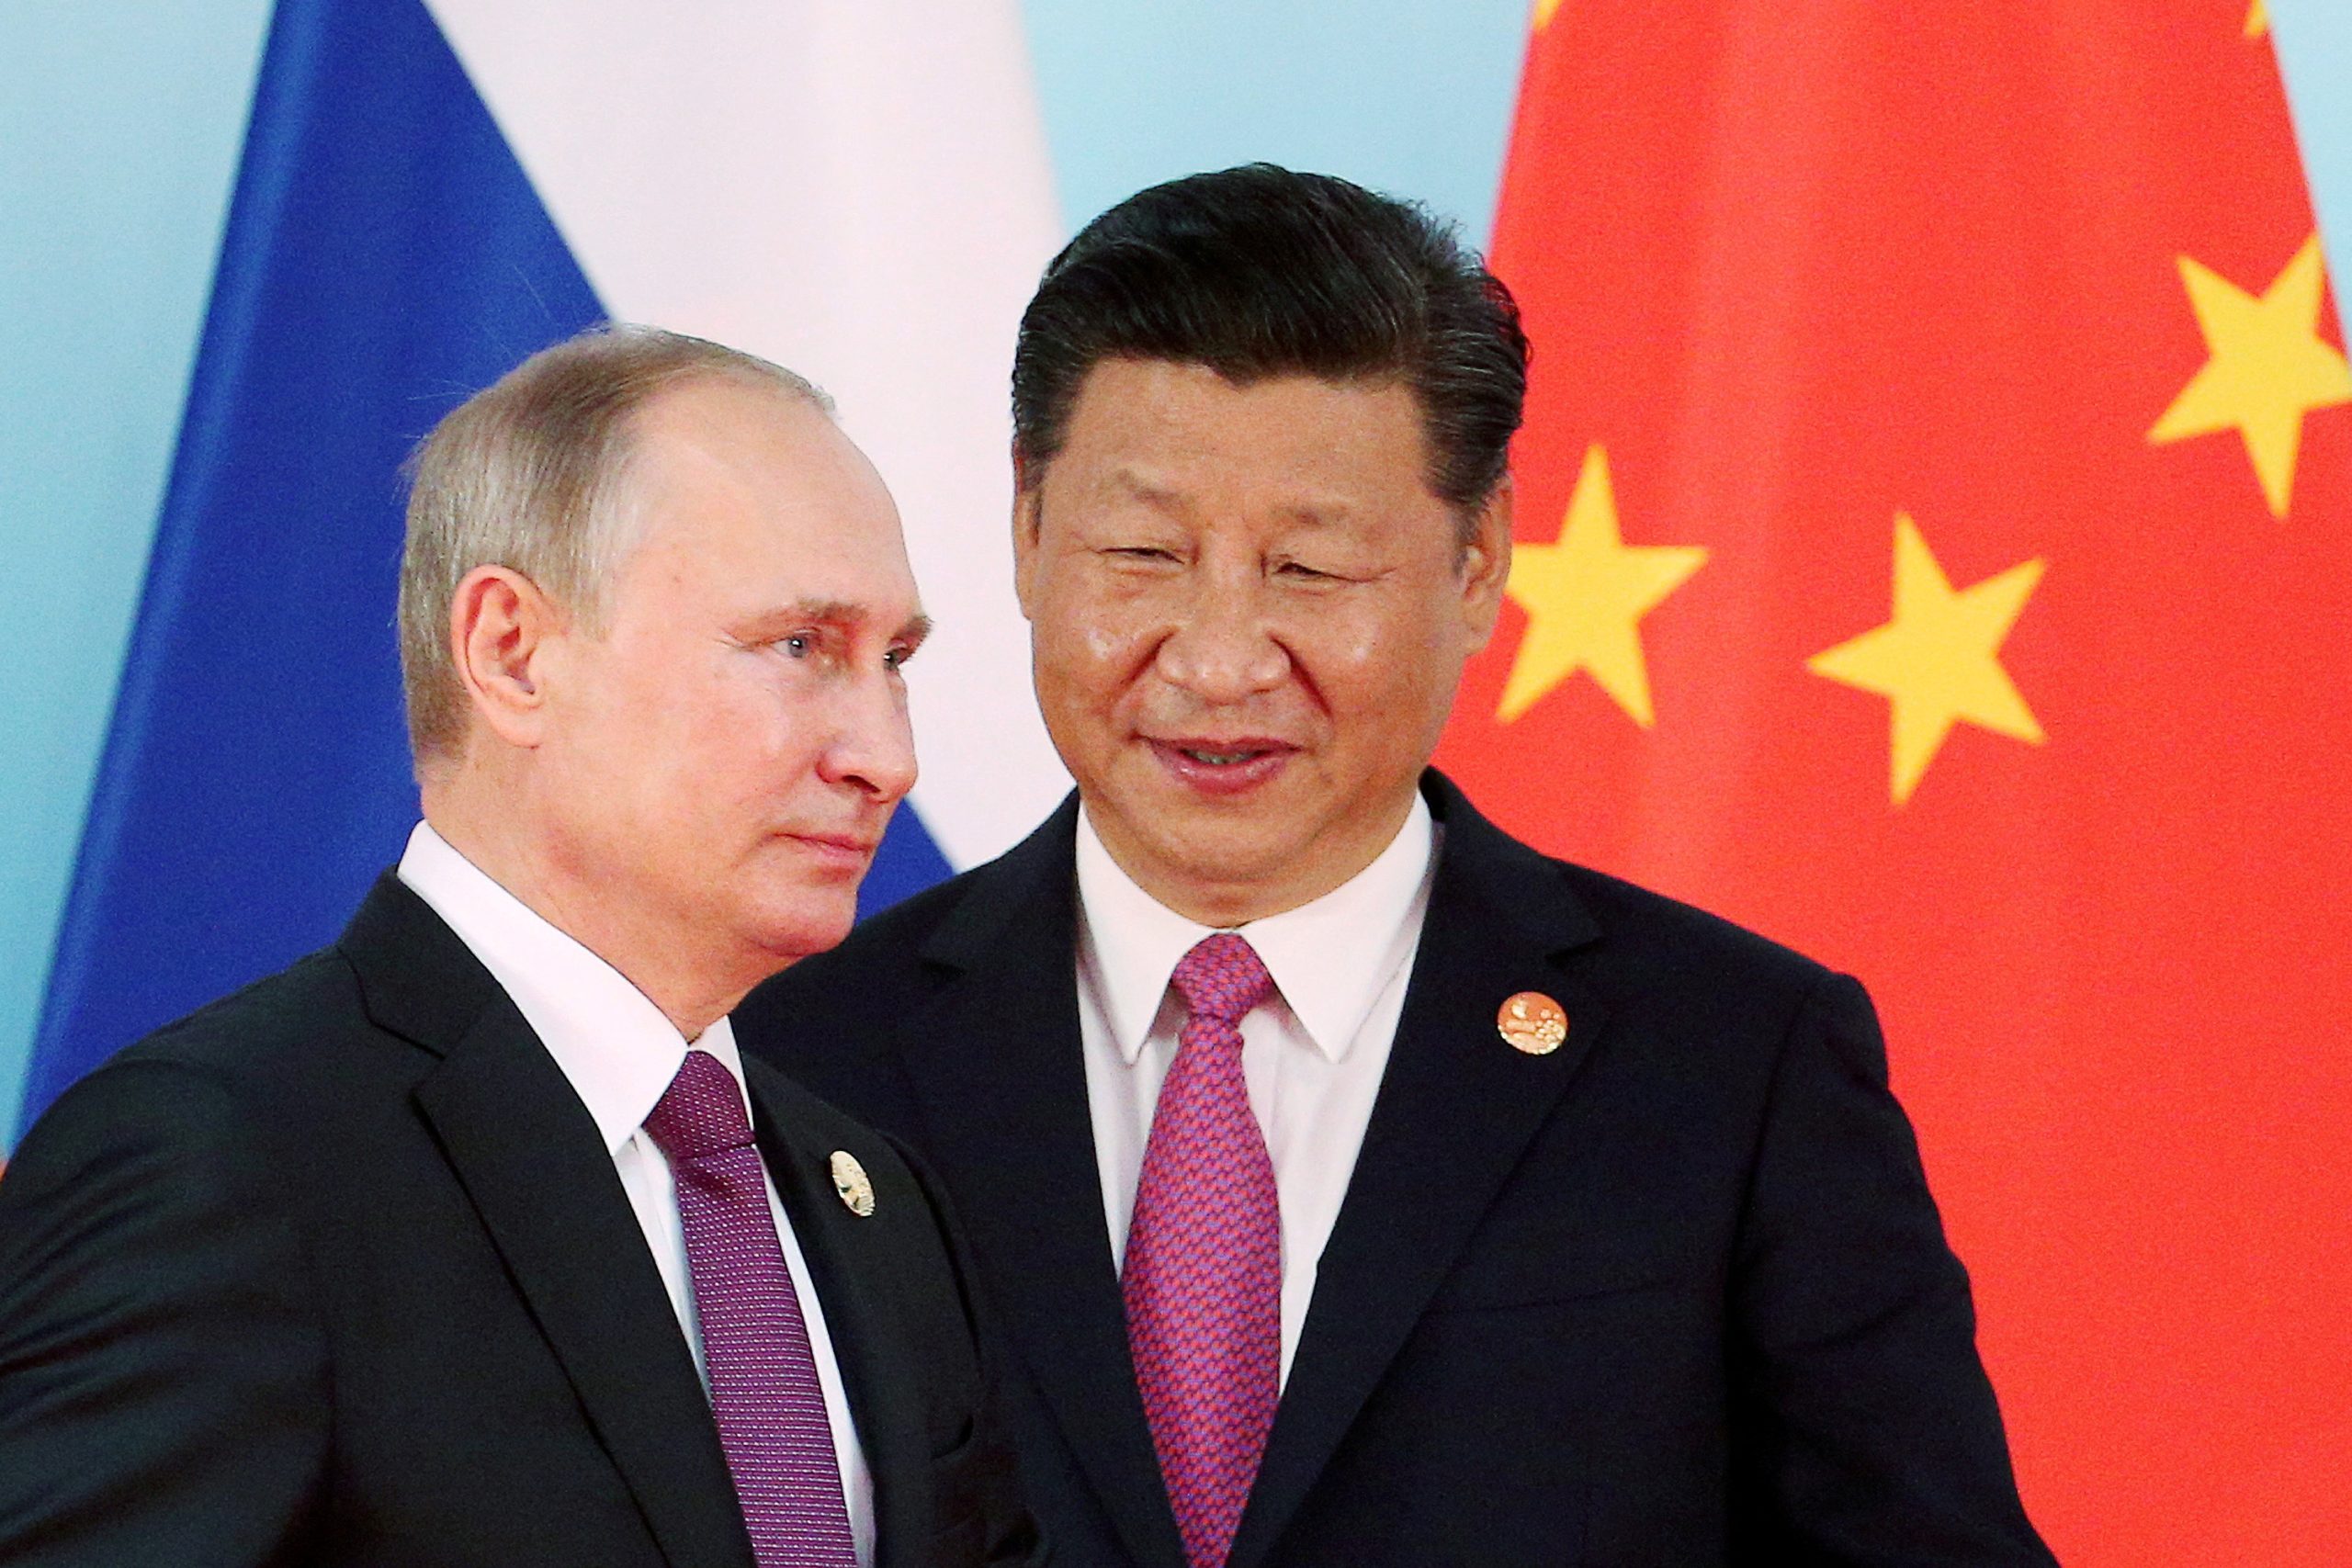 Володимир Путін, диктатор Російської Федерації та Сі Цзіньпін, лідер КНР